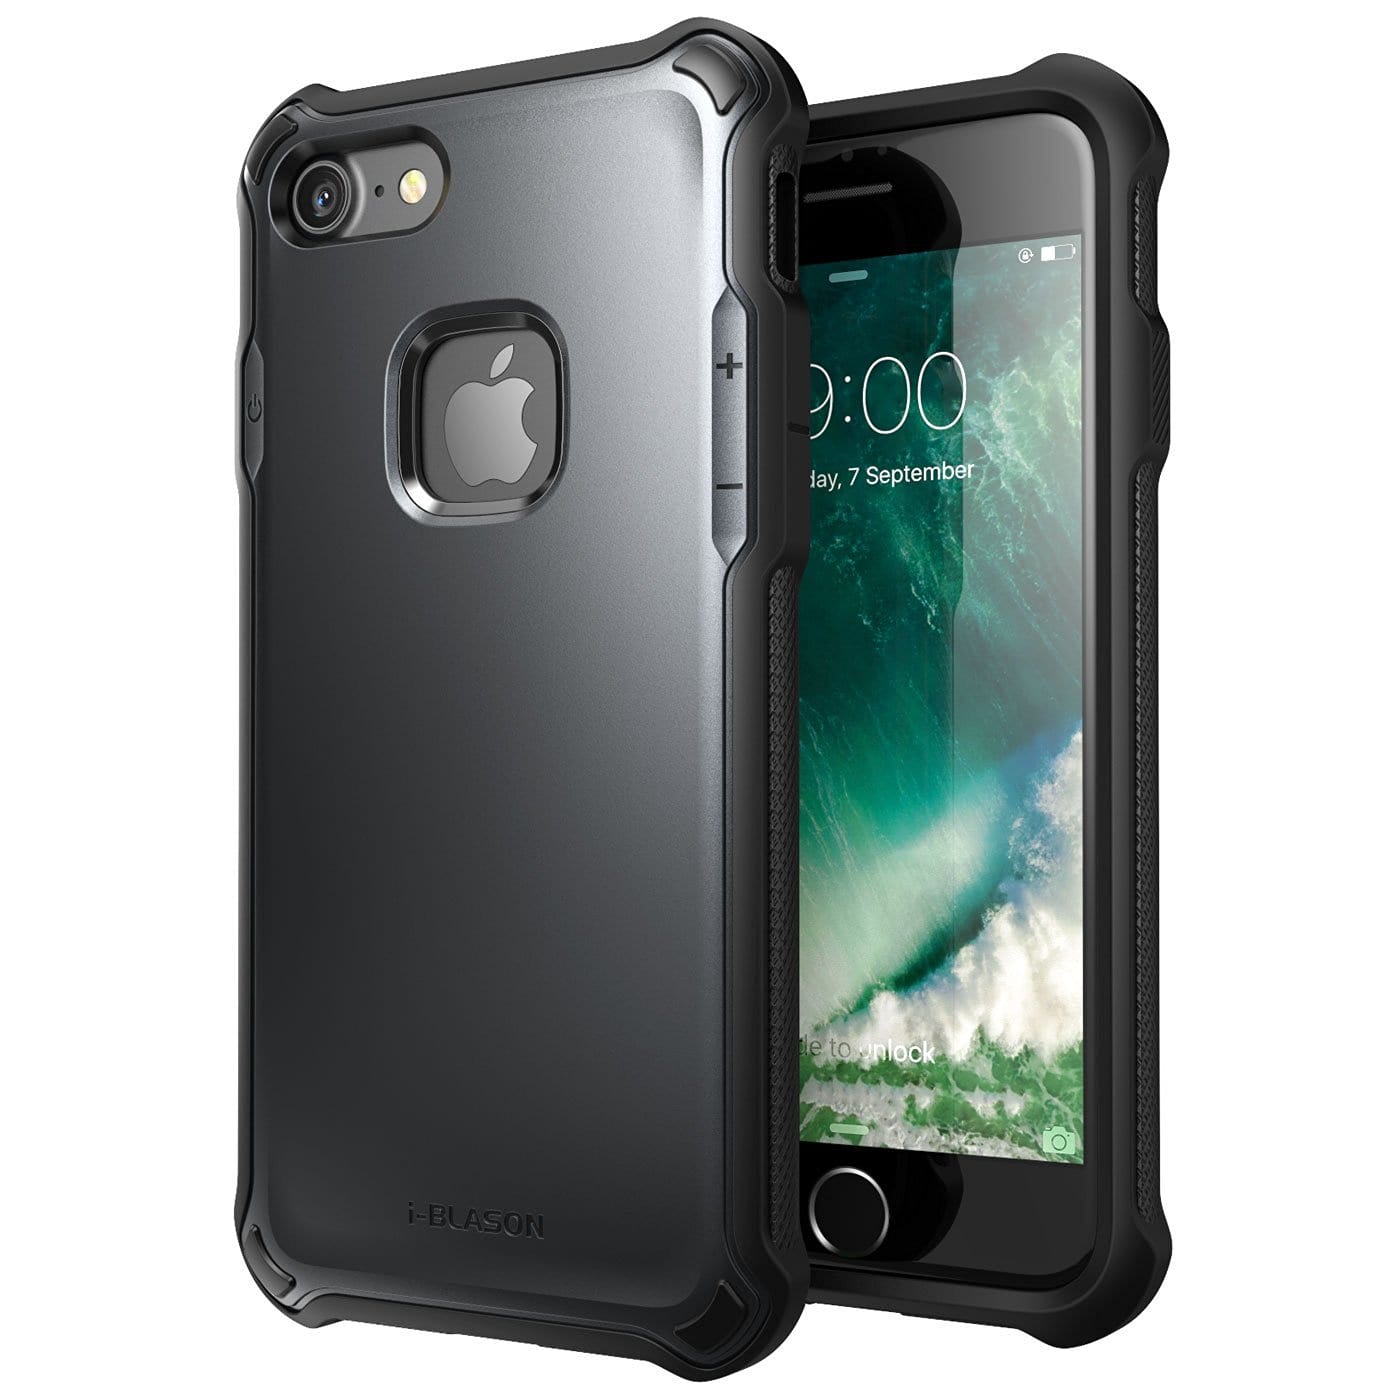 Best iPhone 7 Case: Black Protective Case